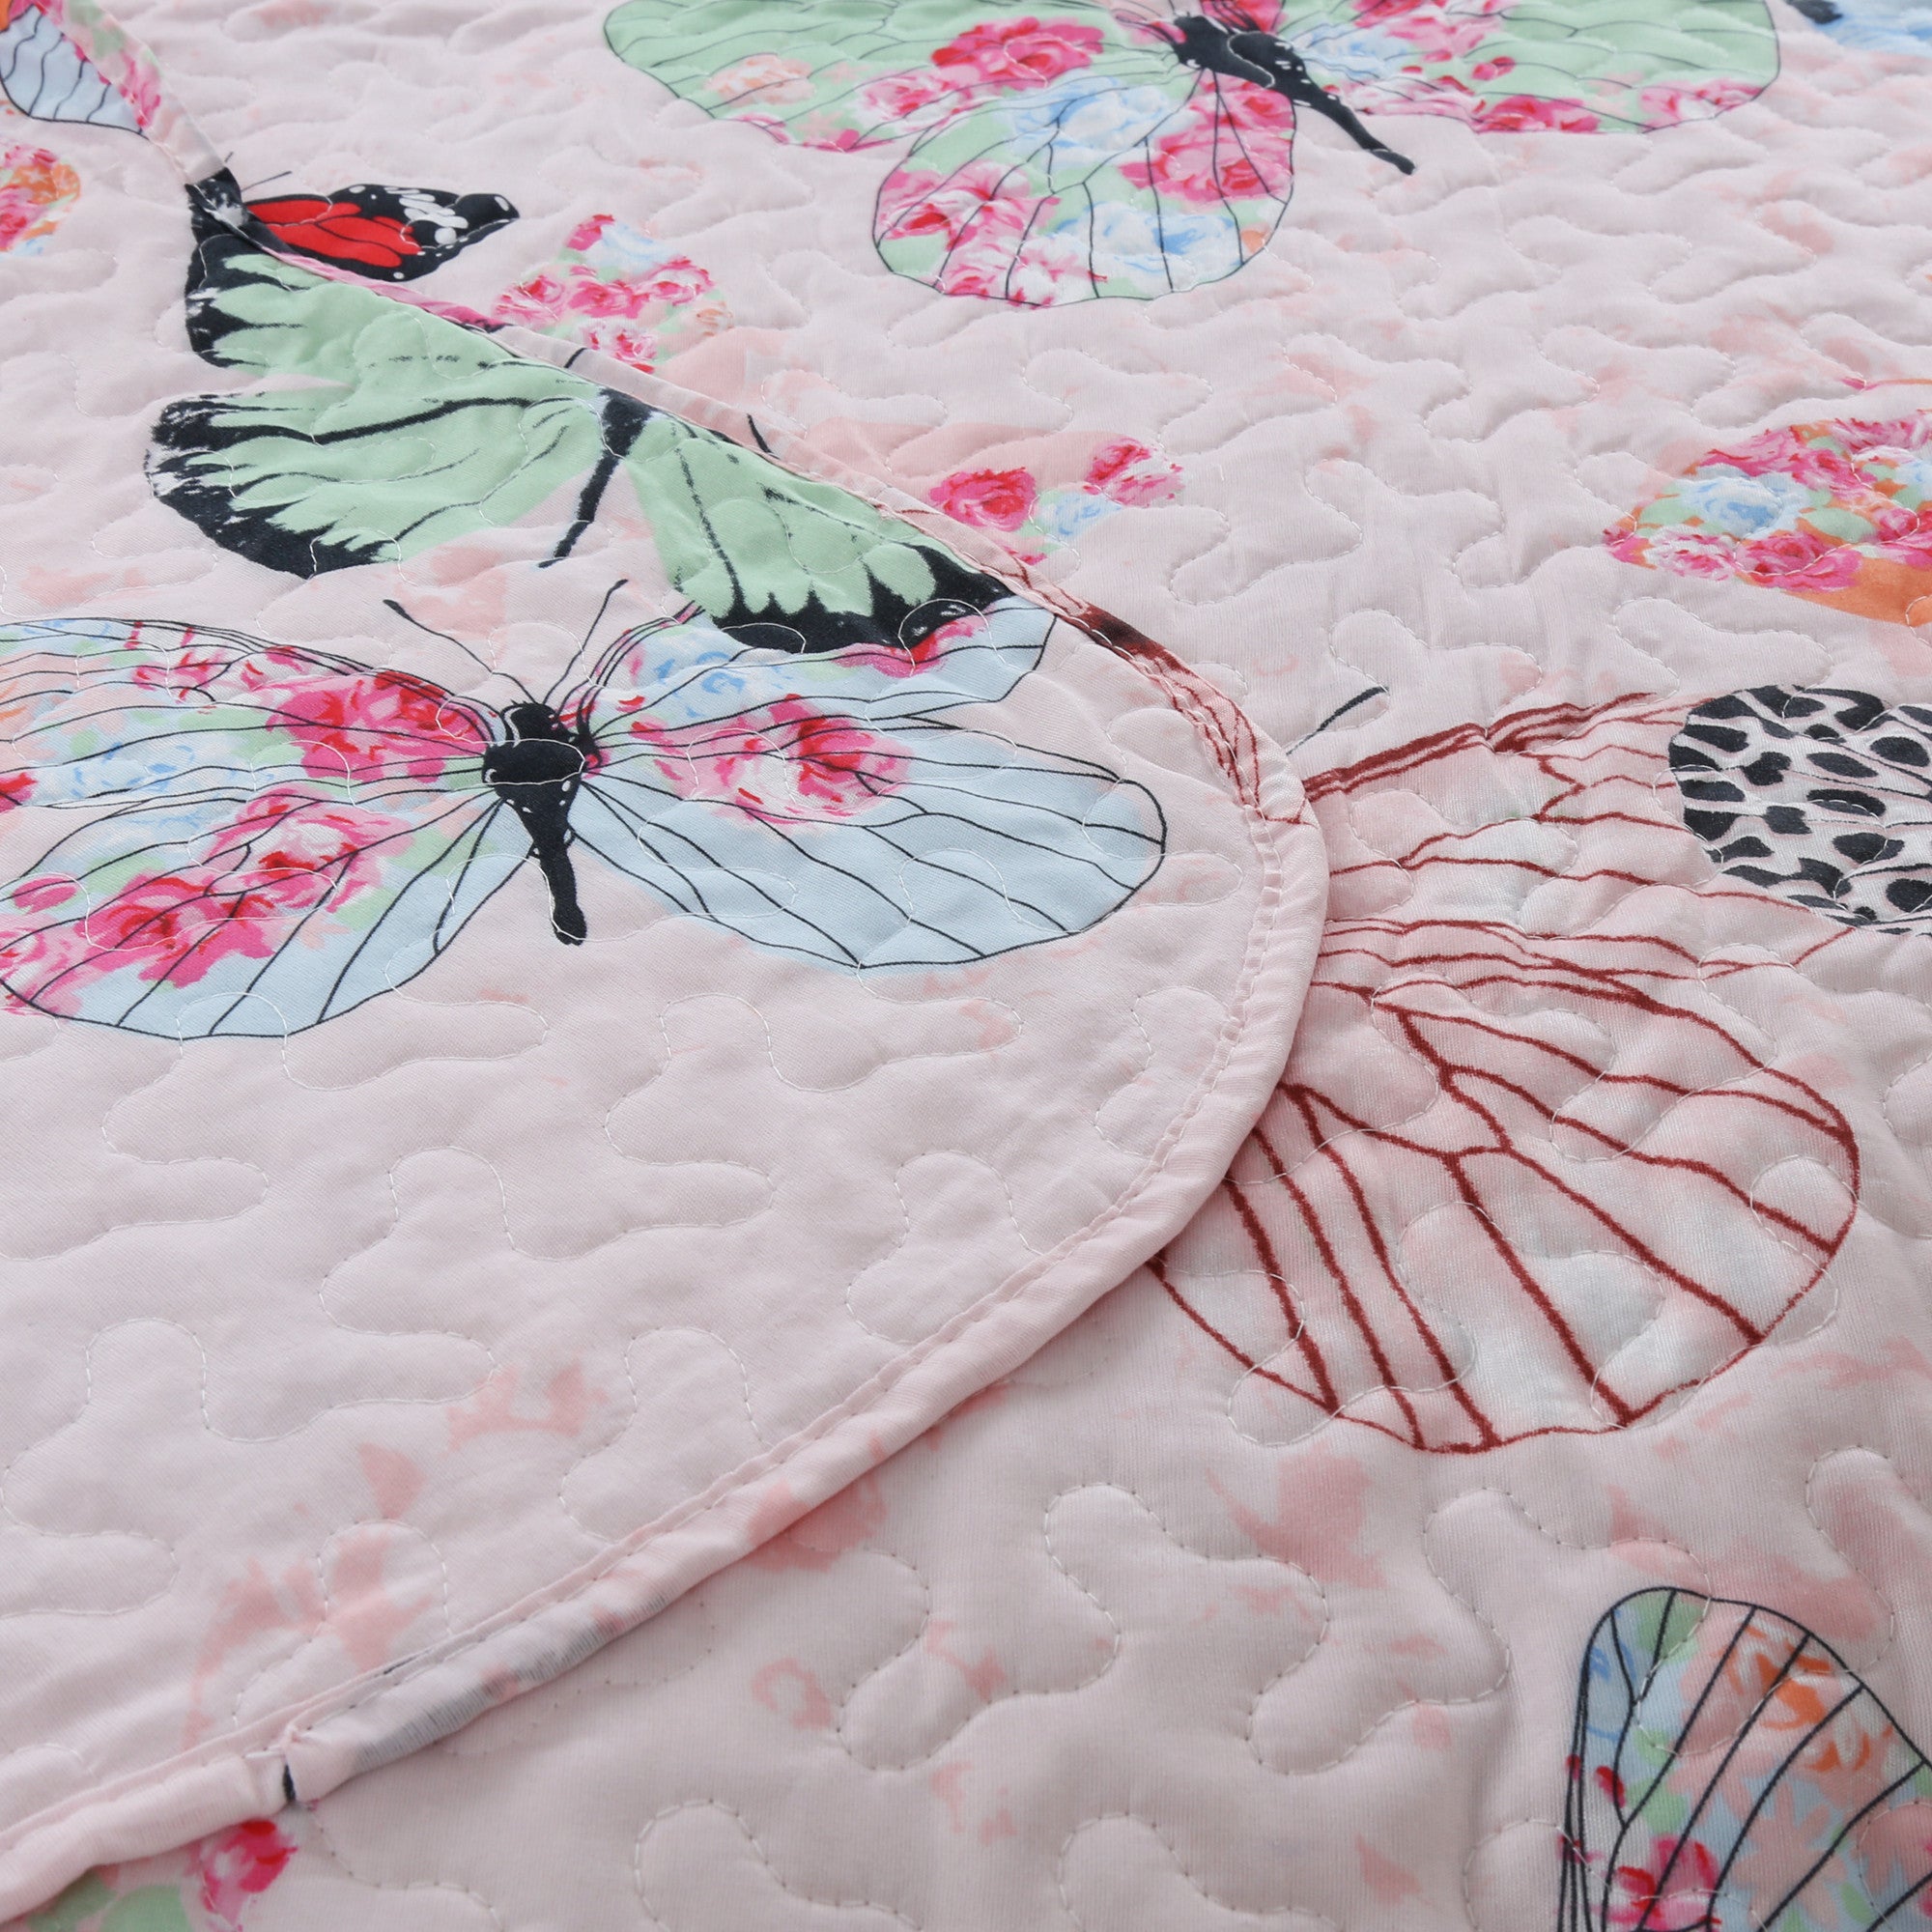 2/3 Piece Kids Bedspread Quilts Set for Teens Girls Bed Coverlet Bunk Girls Comforter Butterfly A72